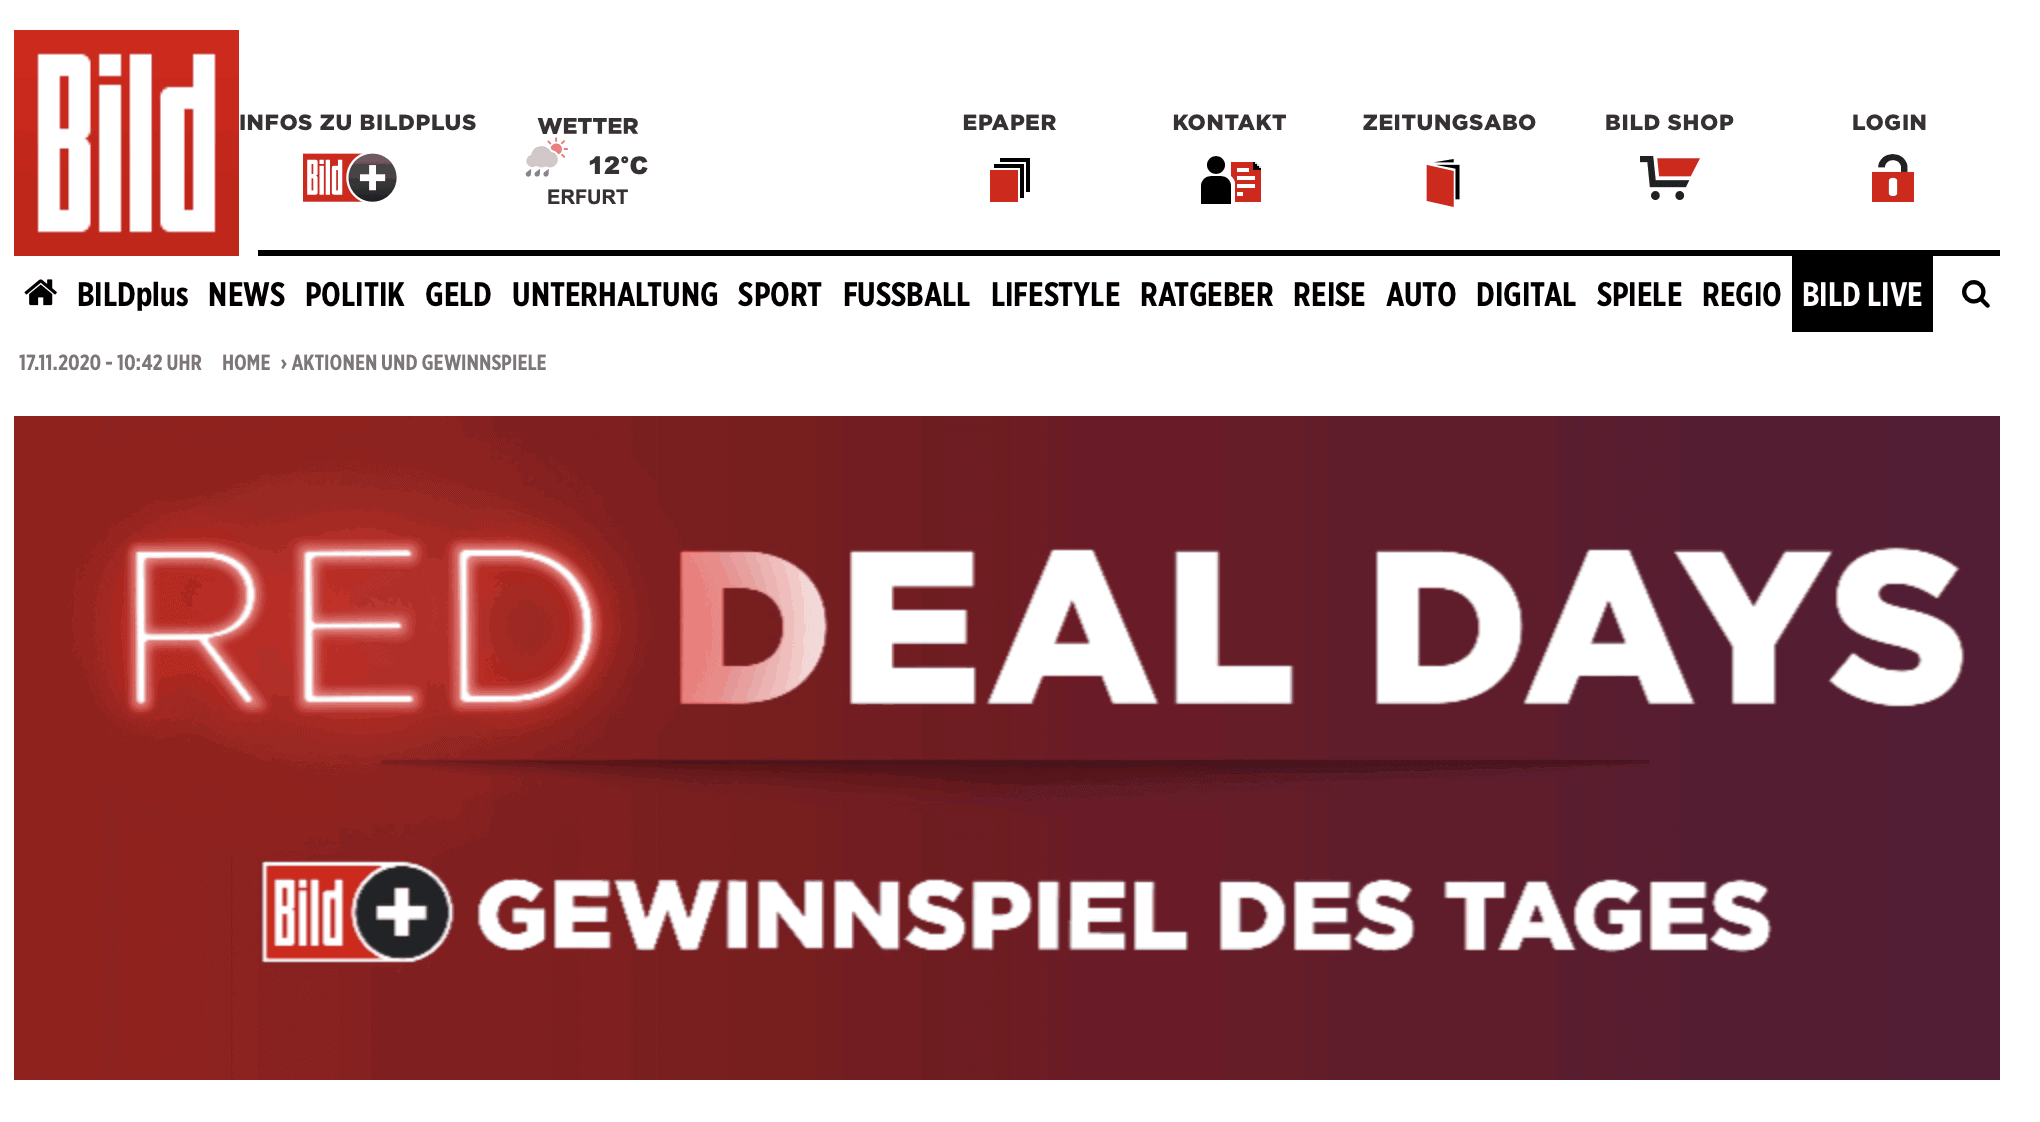 case_Red deal_bildplus_gewinnspiel